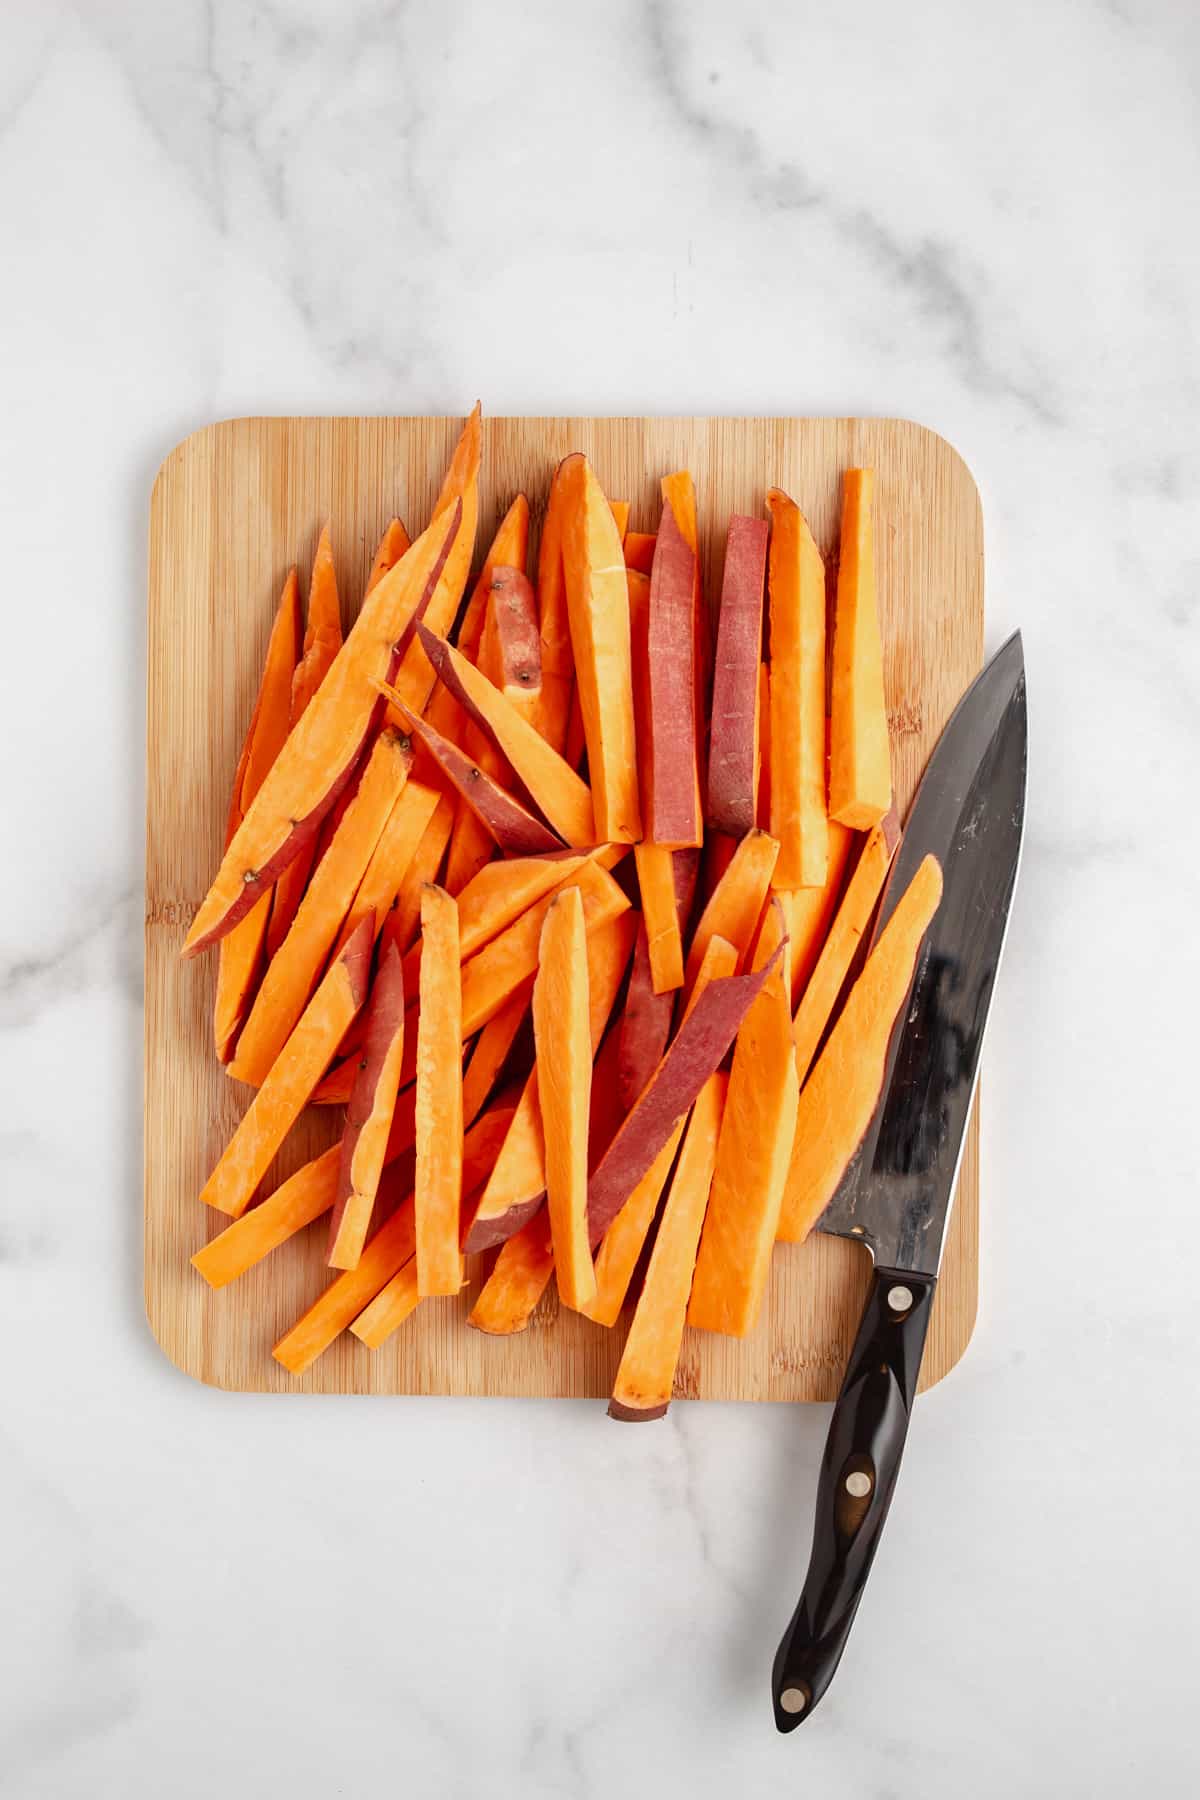 Sliced sweet potato fries on a cutting board.